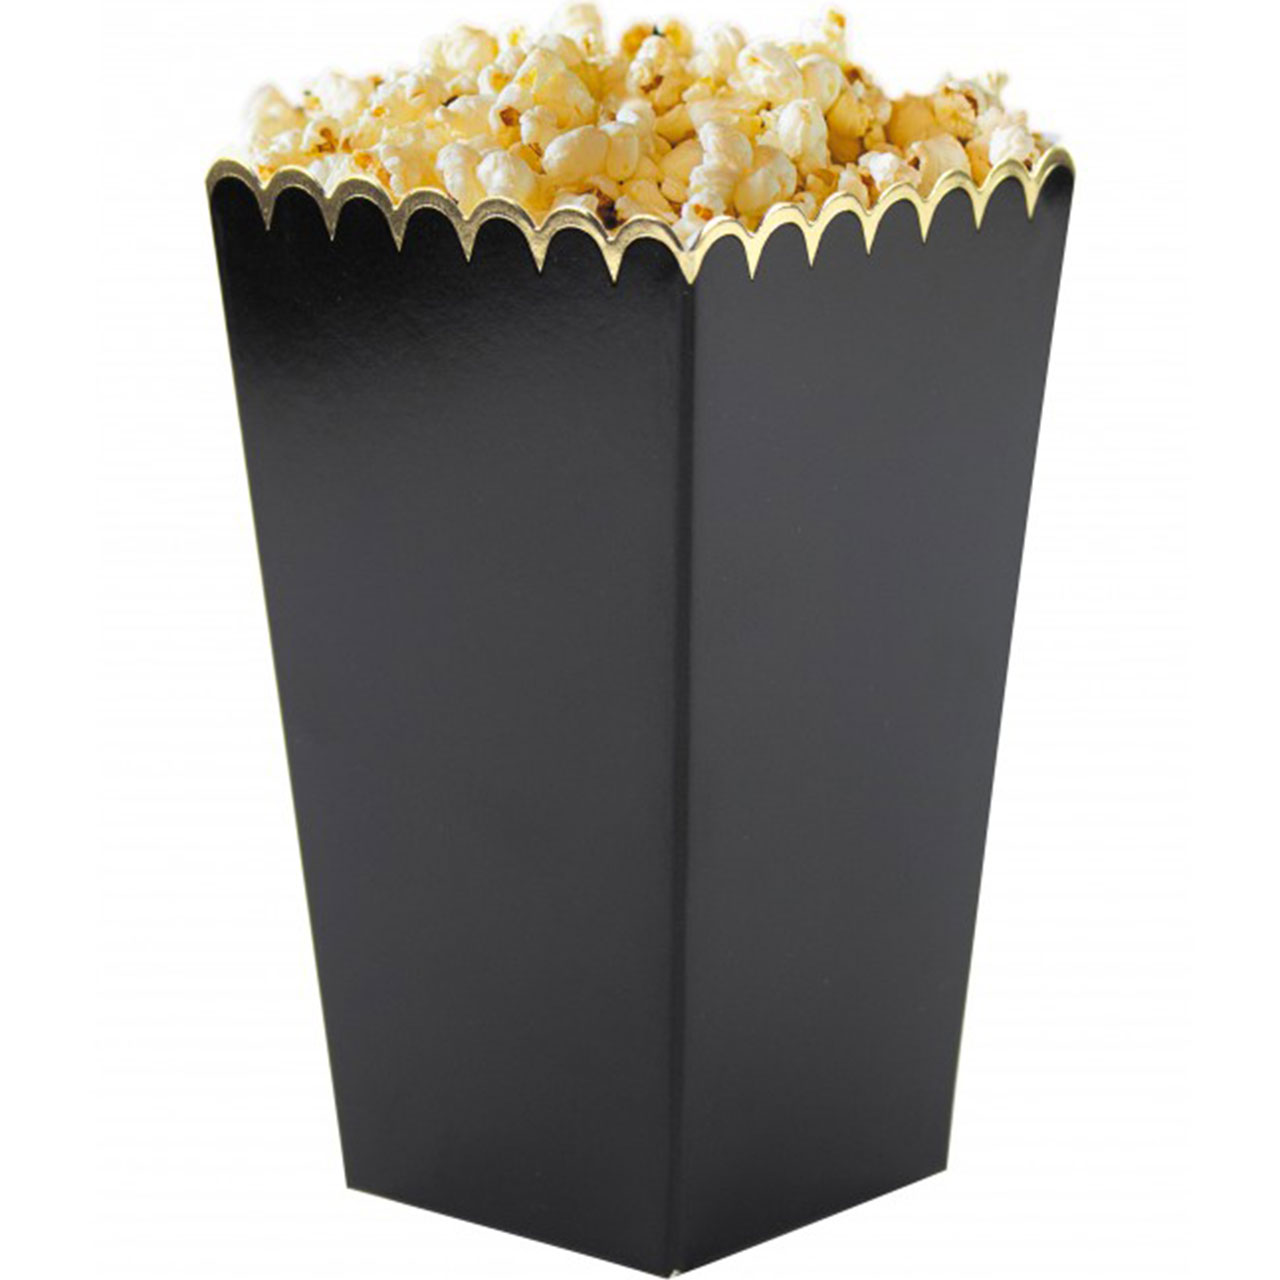 Popcorn Boxes - Black & Gold